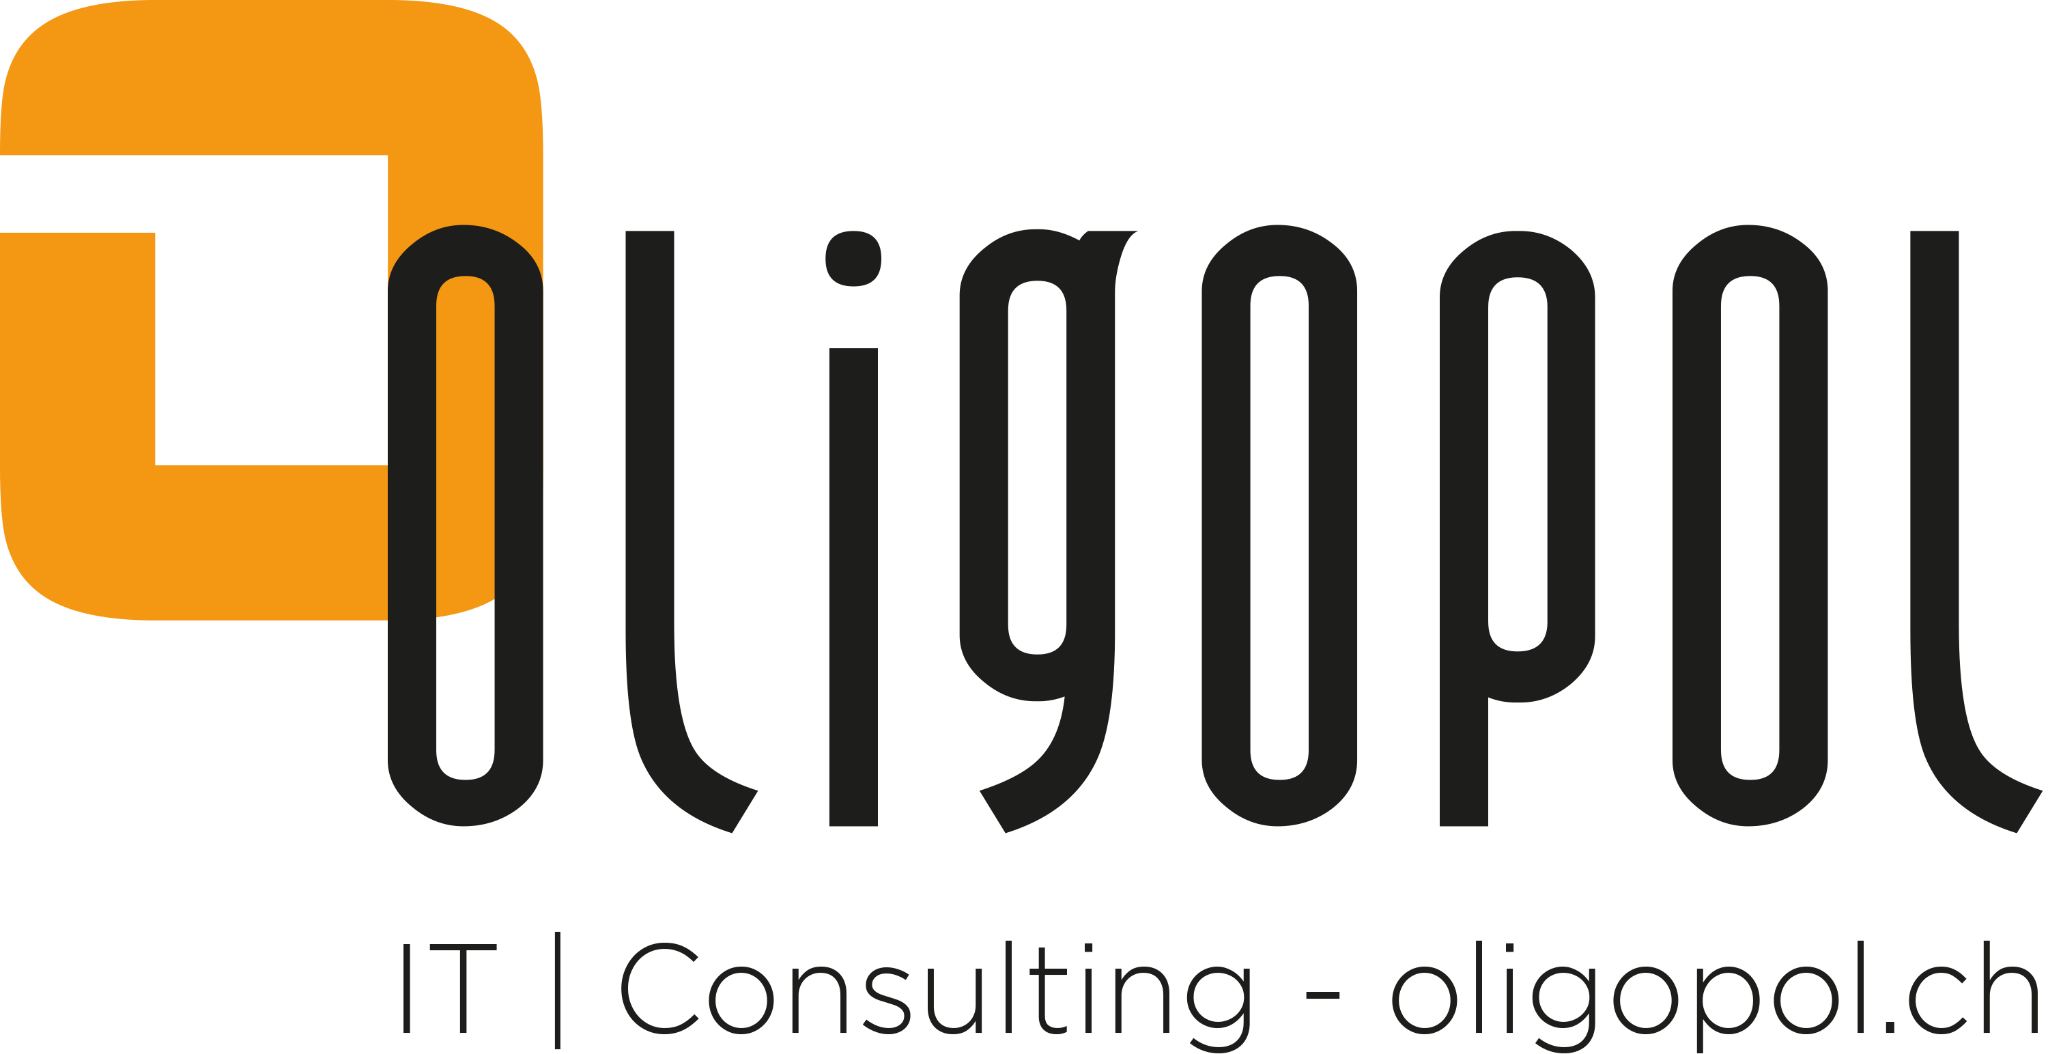 Oligopol GmbH